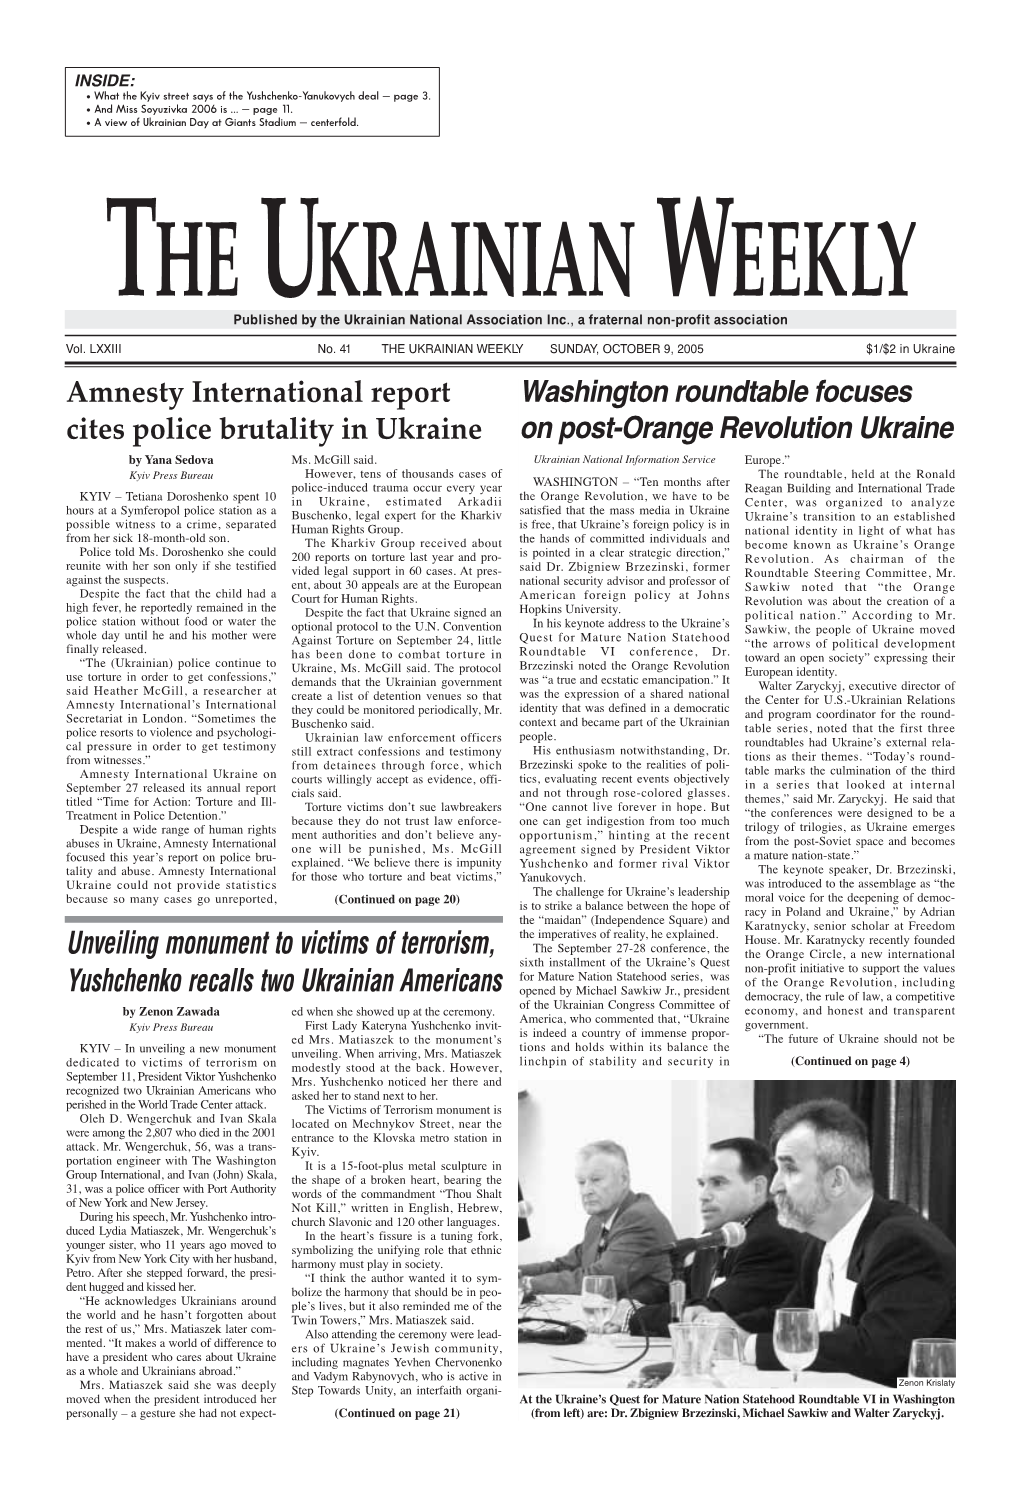 The Ukrainian Weekly 2005, No.41